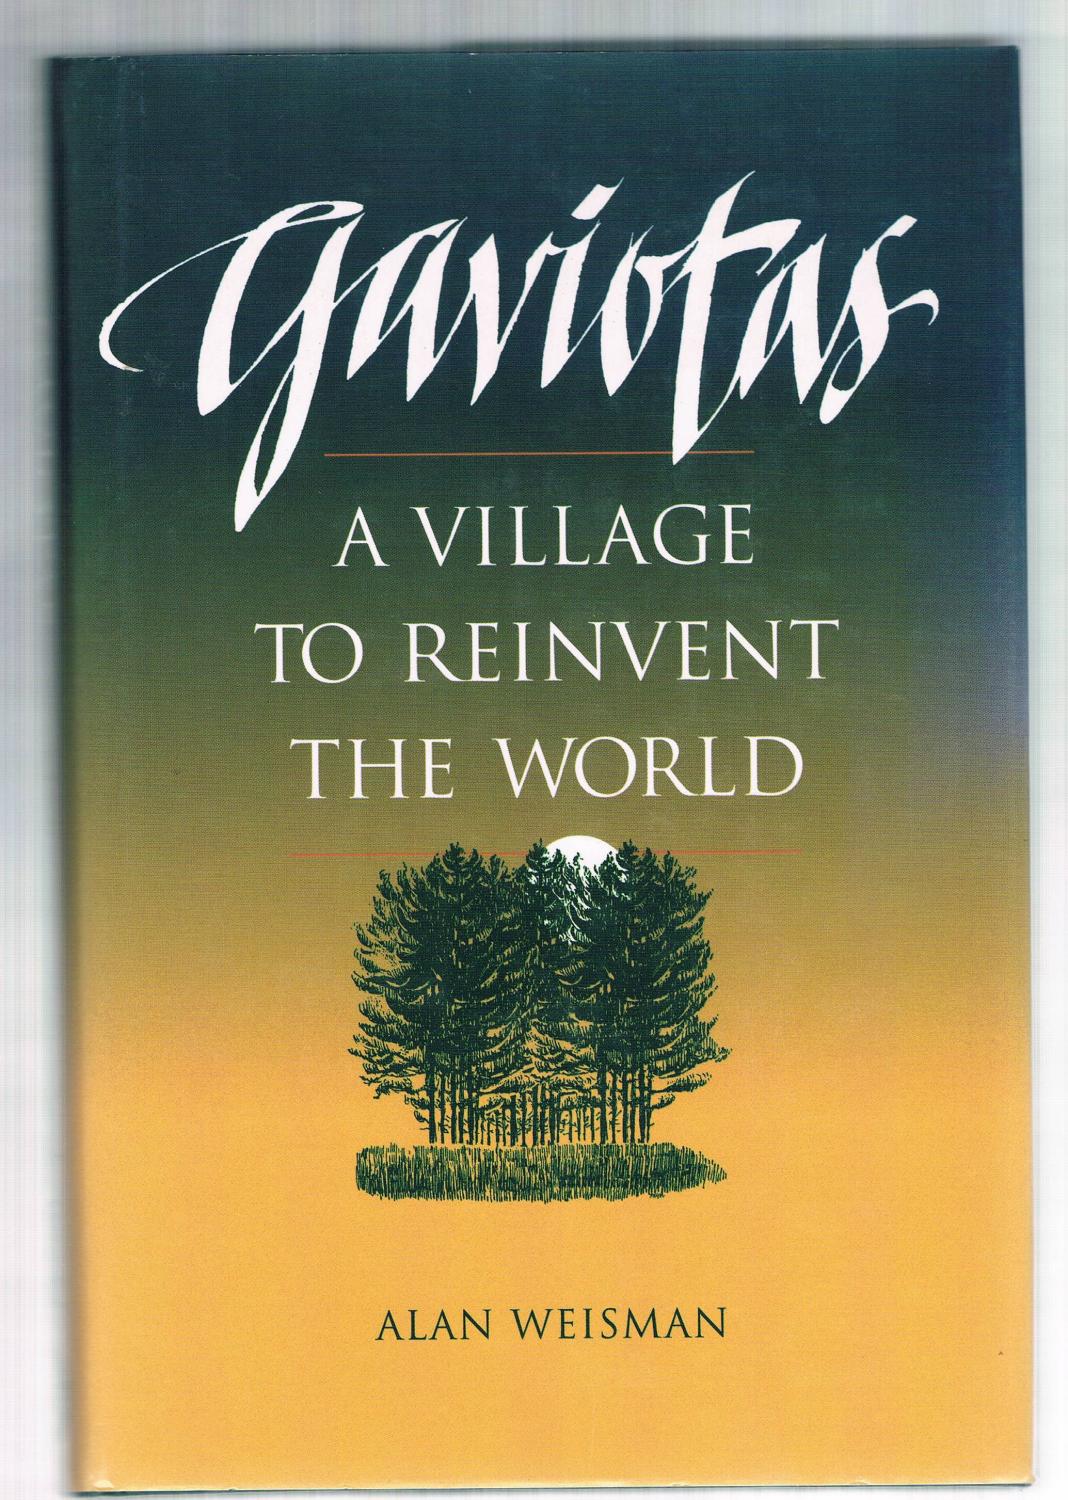 GAVIOTAS A VILLAGE TO REINVENT THE WORLD PDF